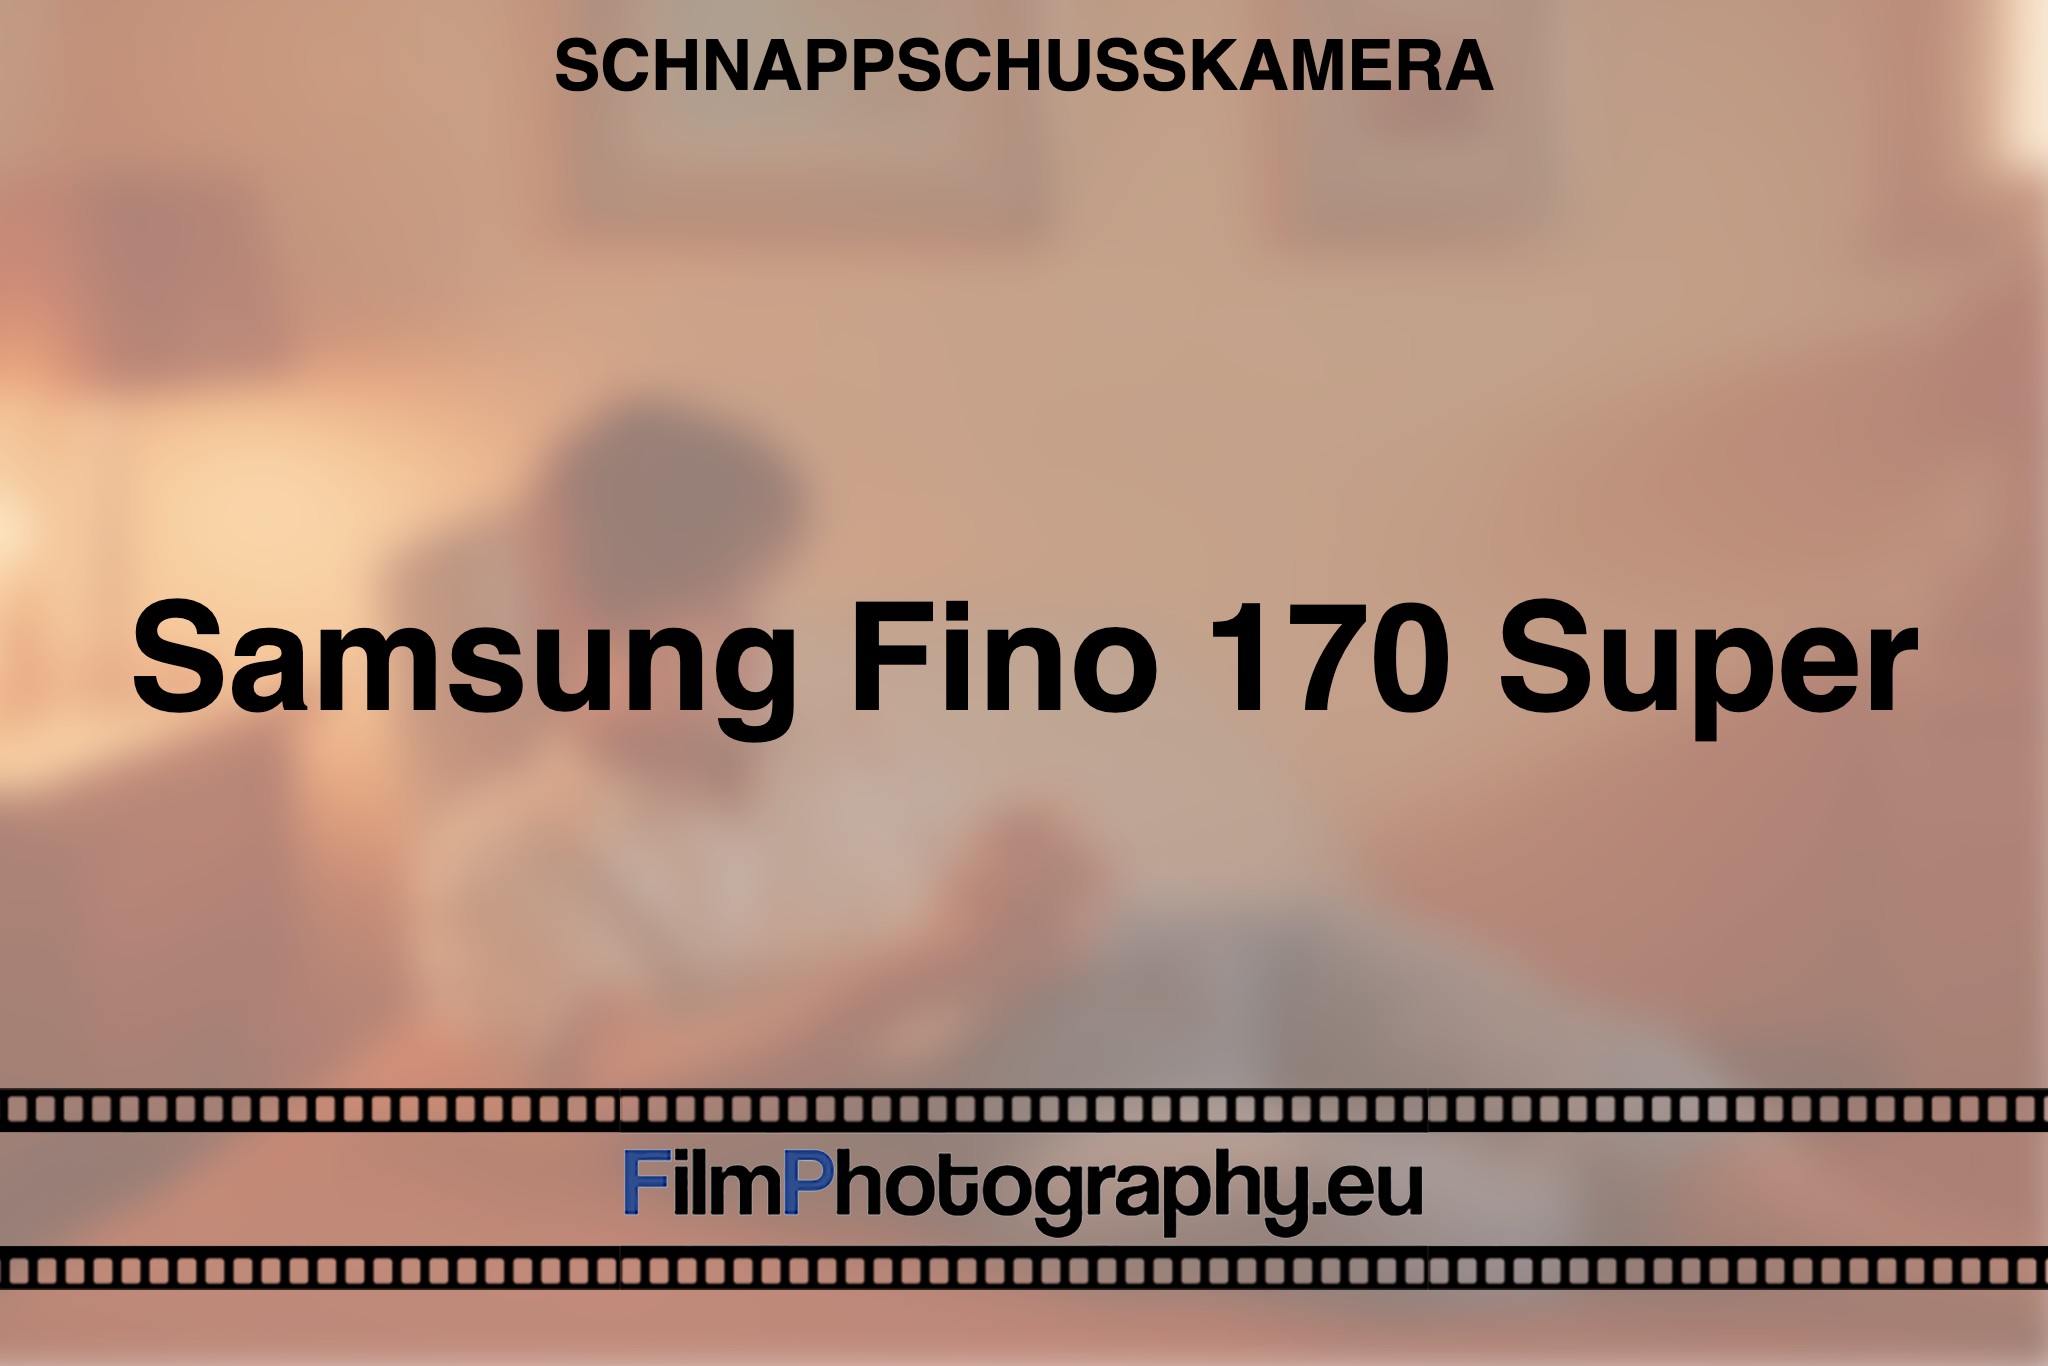 samsung-fino-170-super-schnappschusskamera-bnv